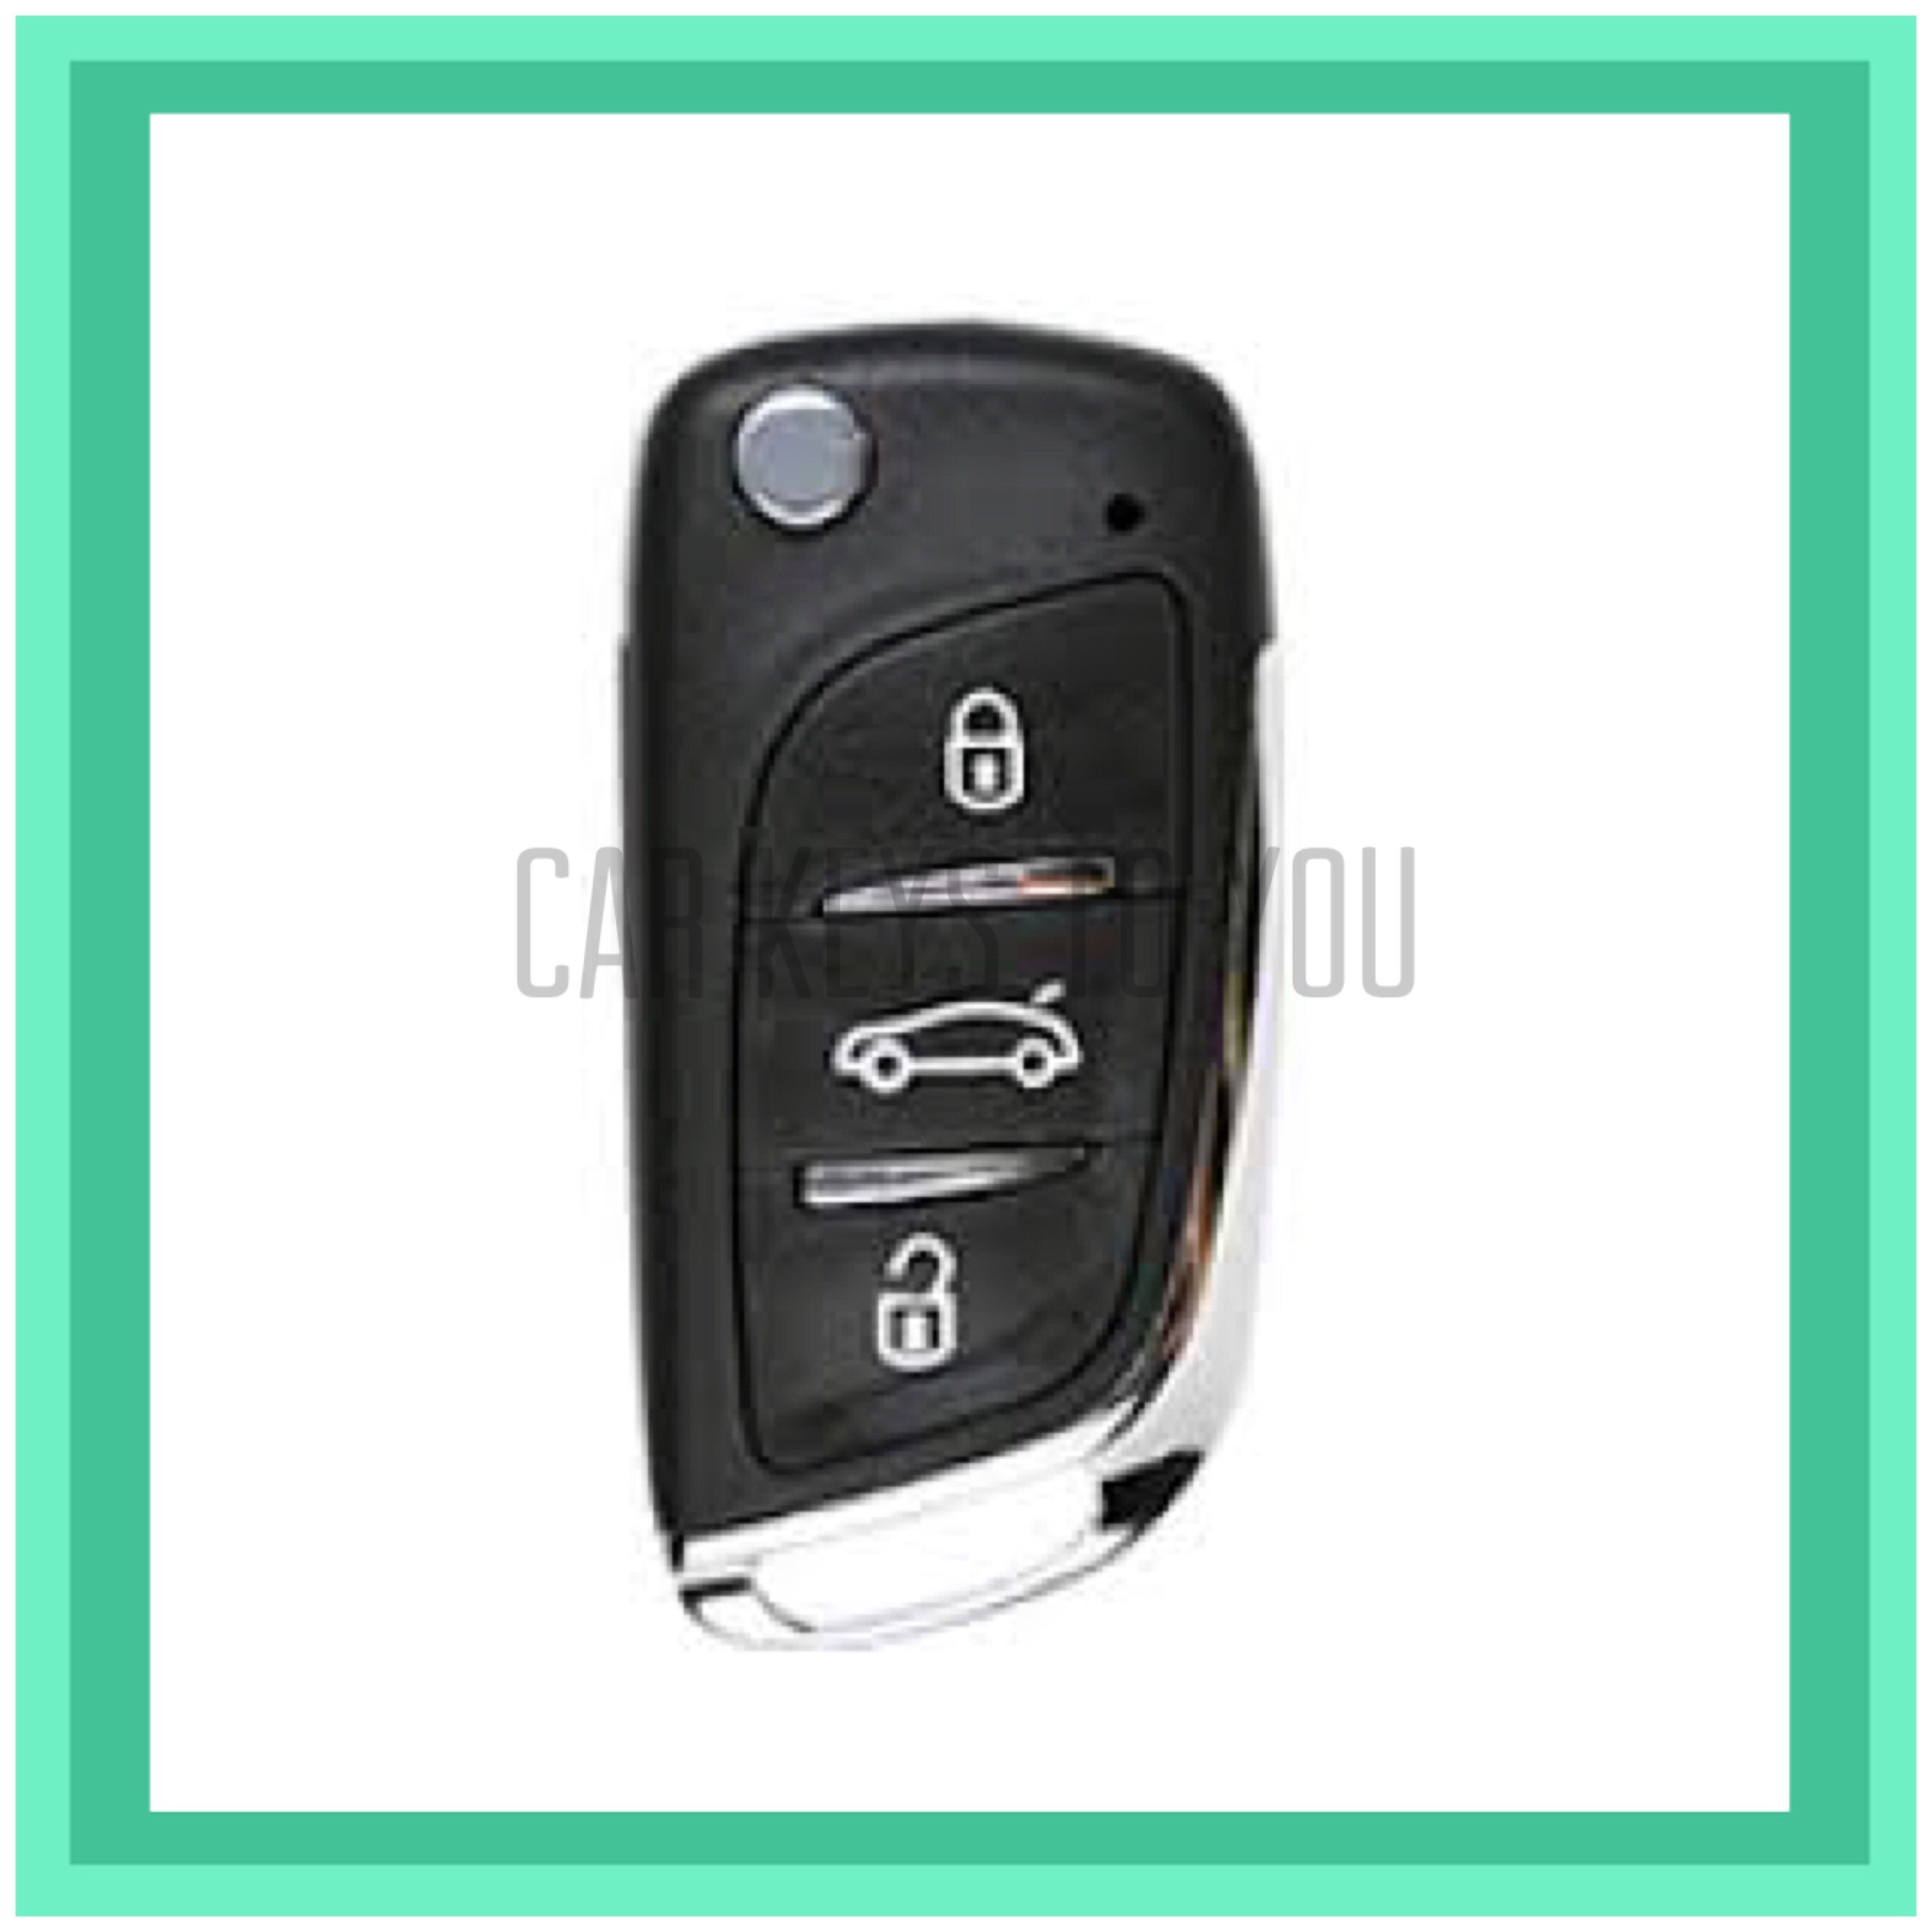 Suzuki Grand Vitara Car Key and Remote. Suit JB 2008 - 2013